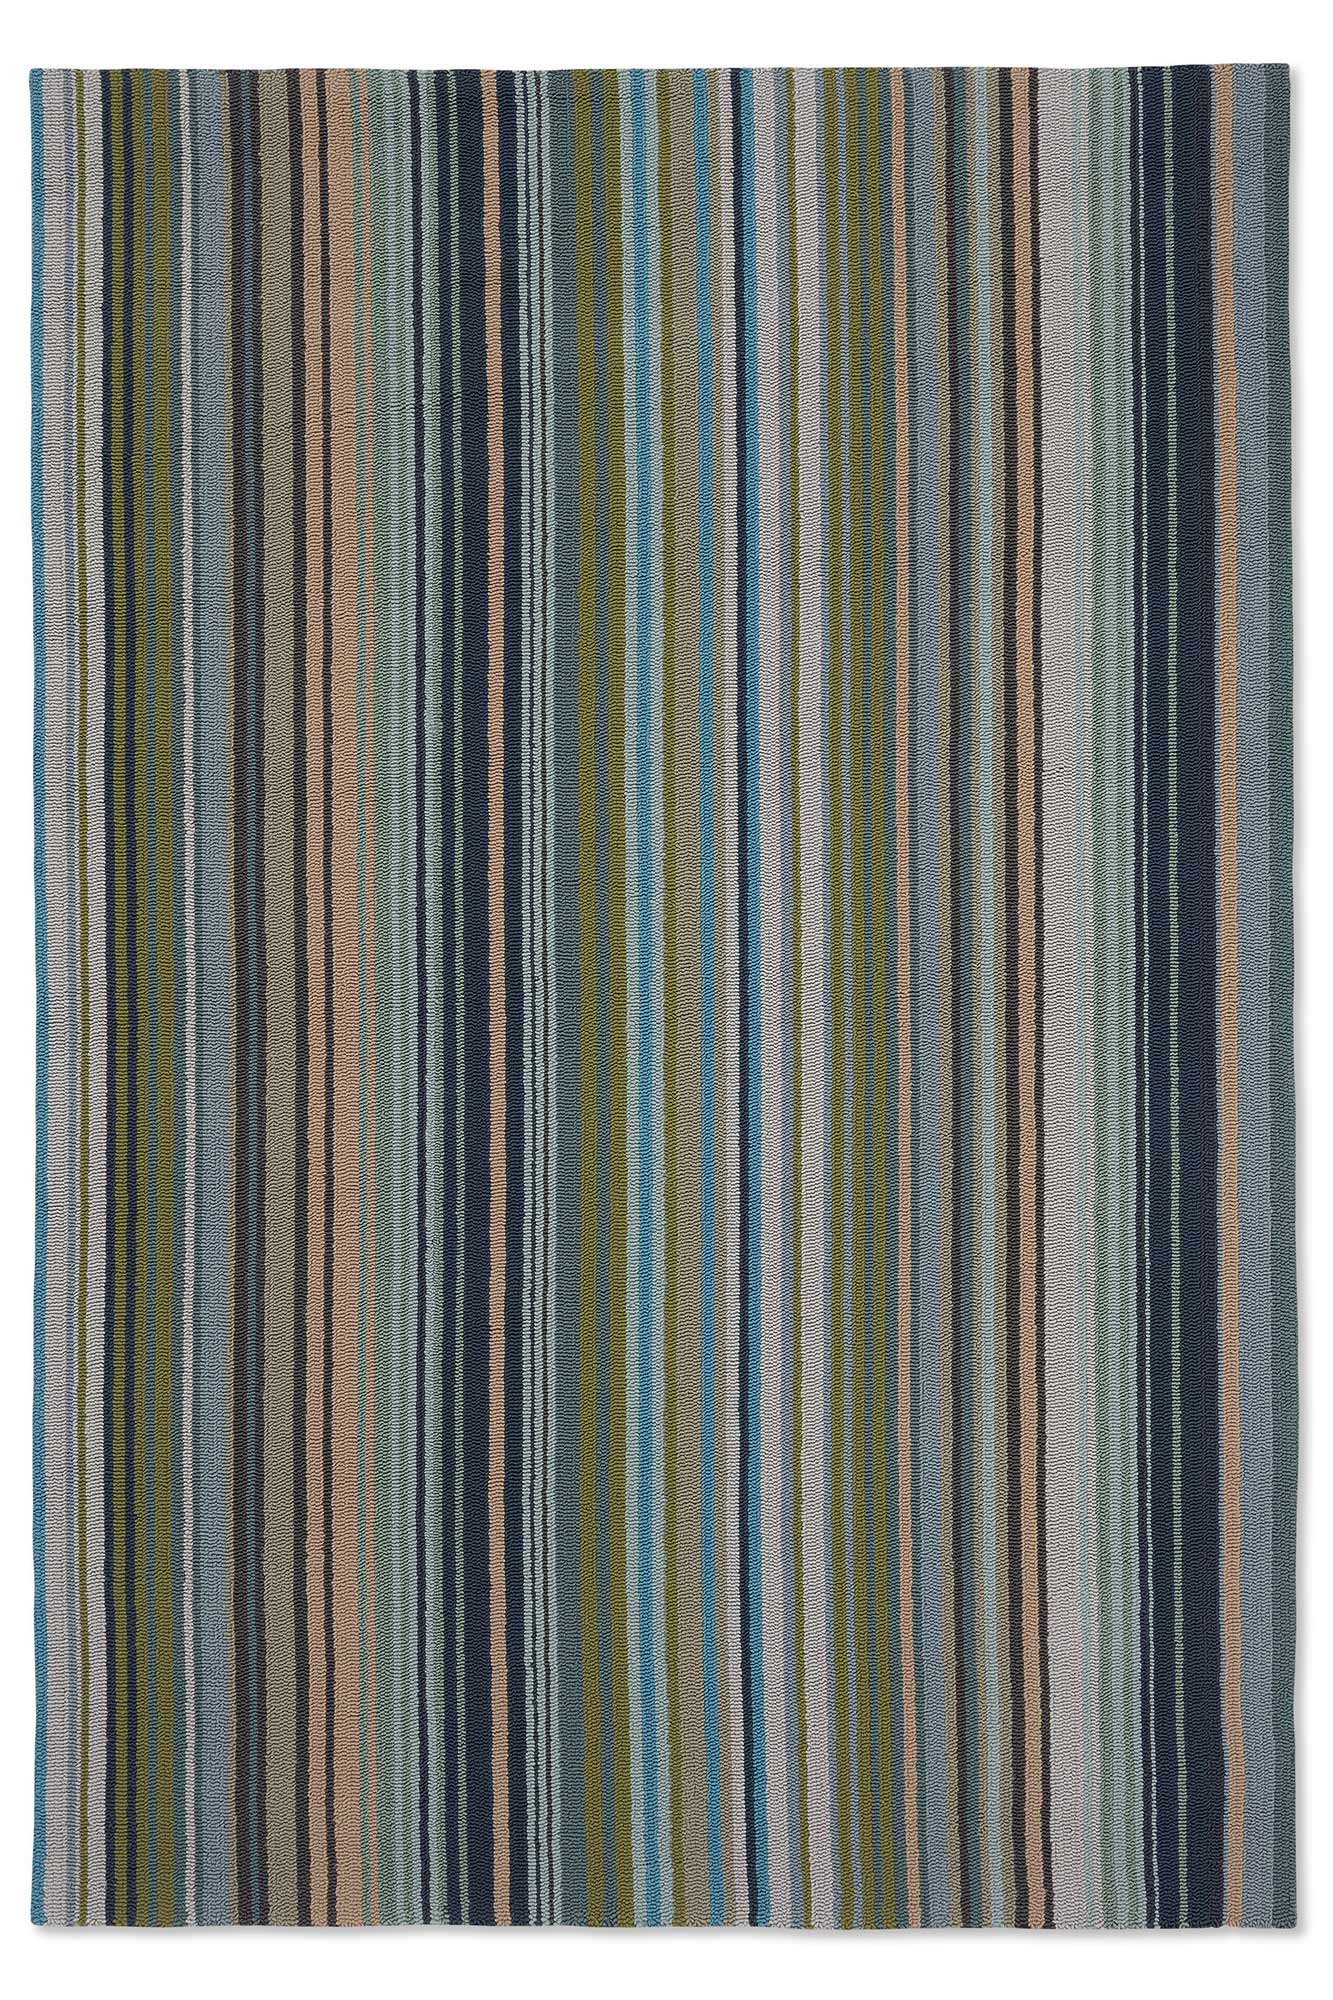 HAR-O-spectro-stripes-emerald-marine-rust-442108-A